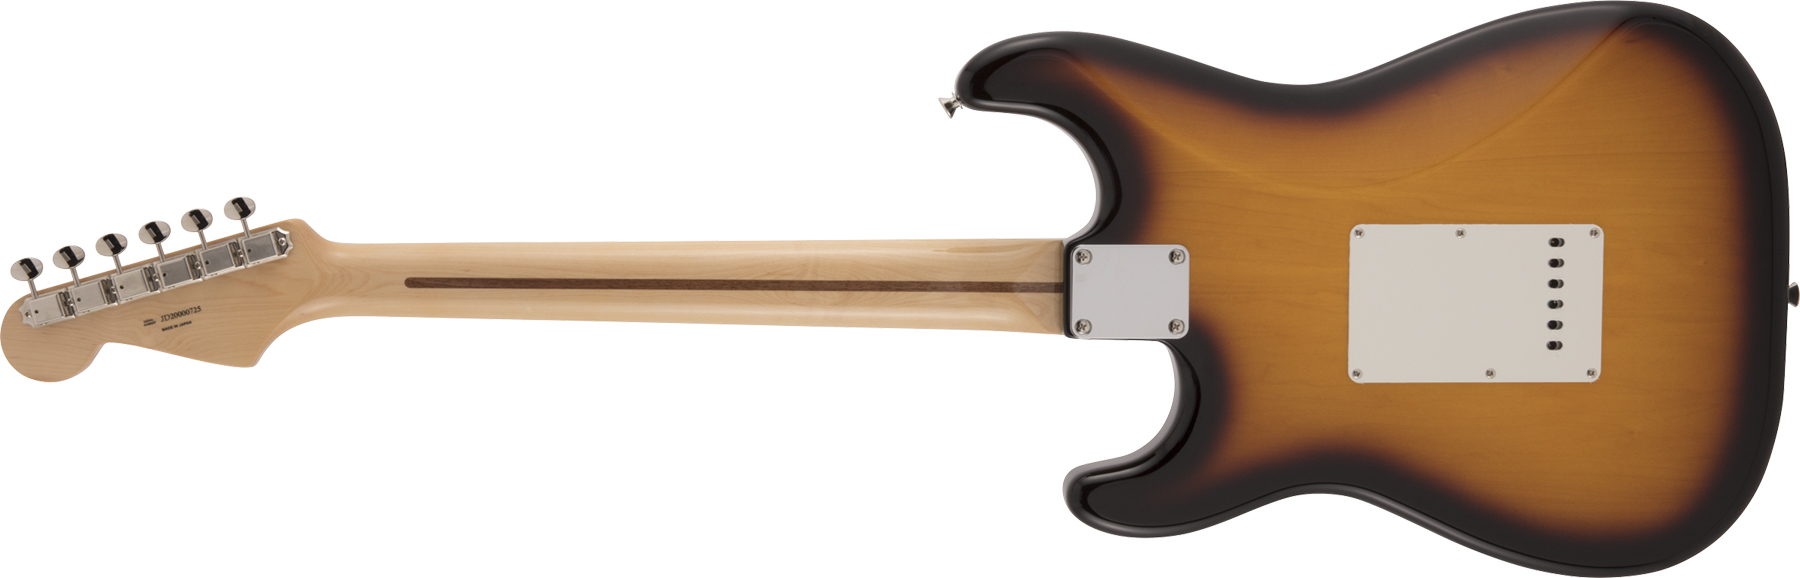 Fender Strat Traditional 50s Jap Mn - 2-color Sunburst - Guitarra eléctrica con forma de str. - Variation 1